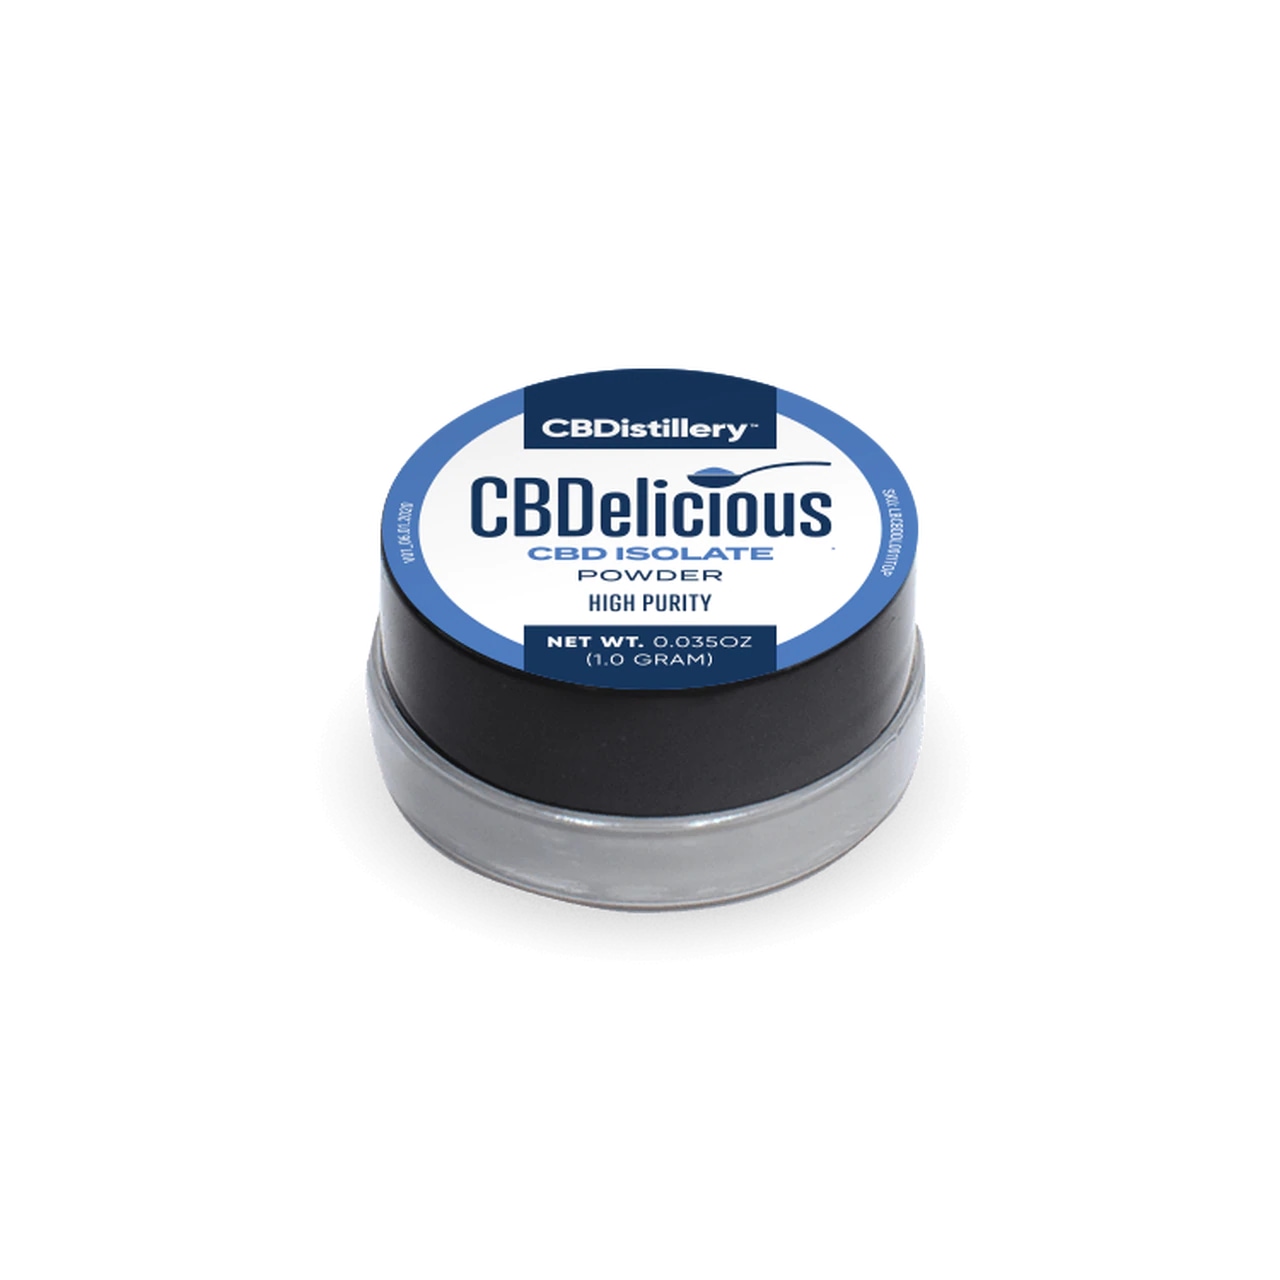 CBDistillery, High Purity CBDelicious CBD Isolate Powder From Hemp, 970mg of CBD